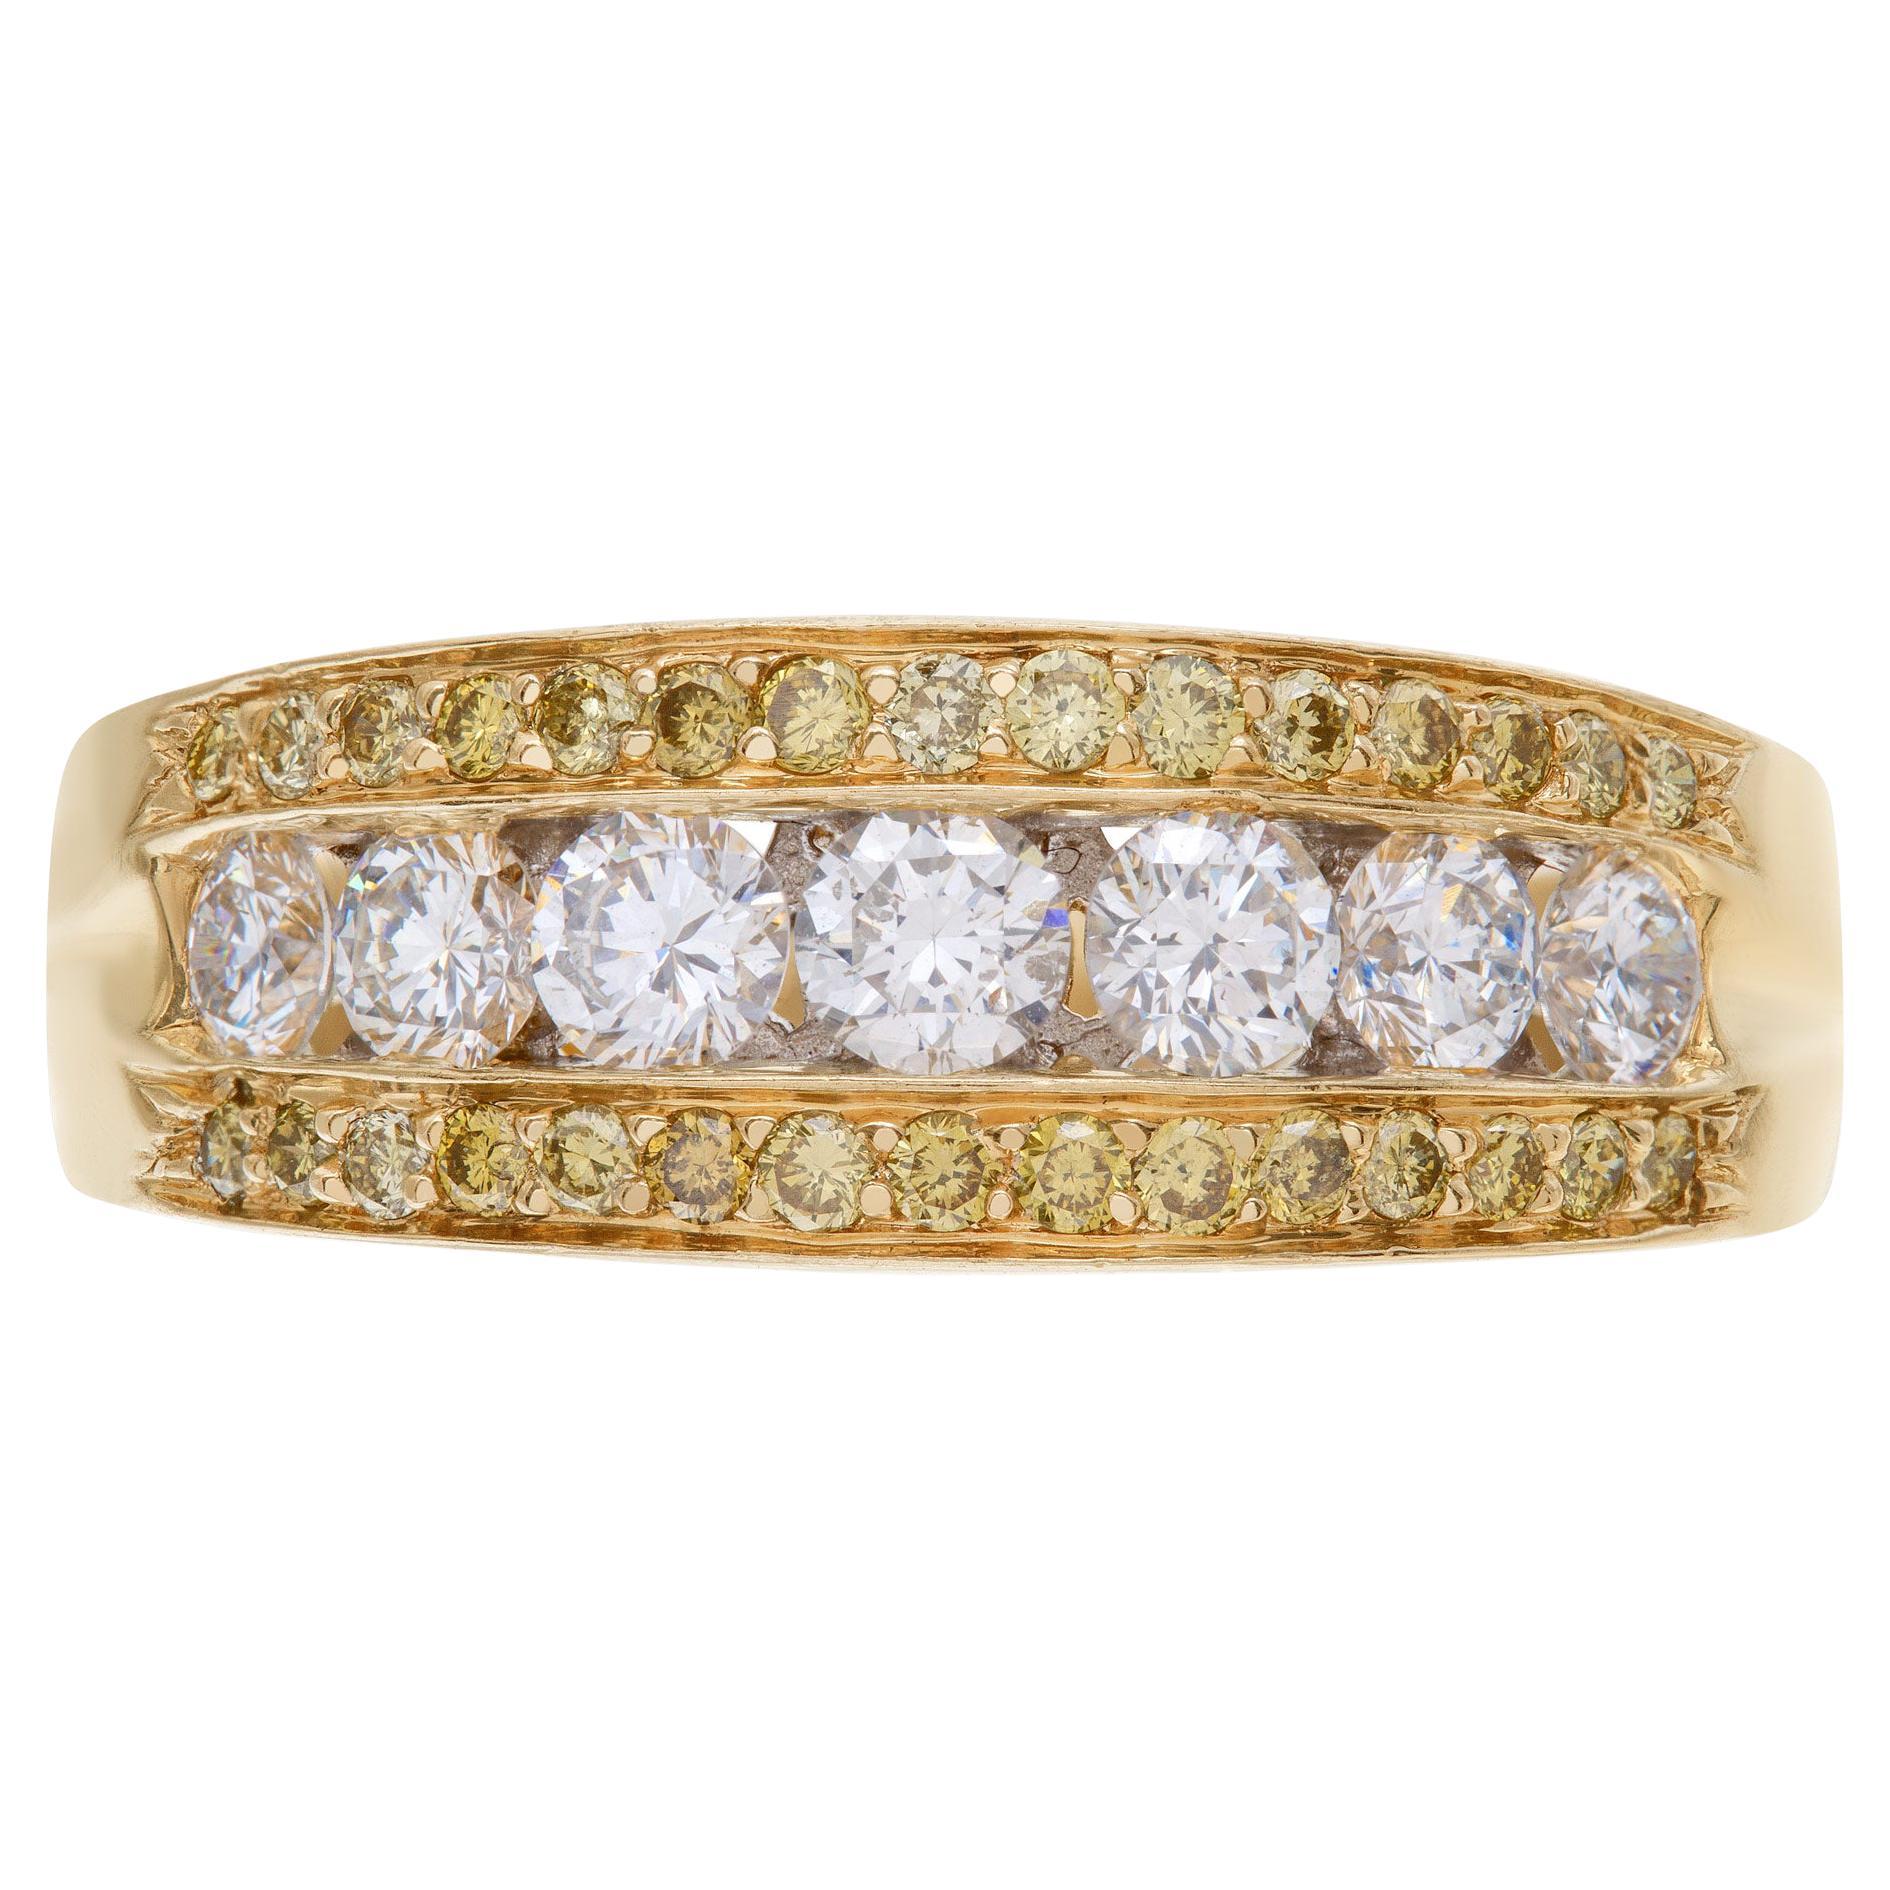 Diamond Wedding Ring with 7 Full Cut Round Brilliants Diamonds Set